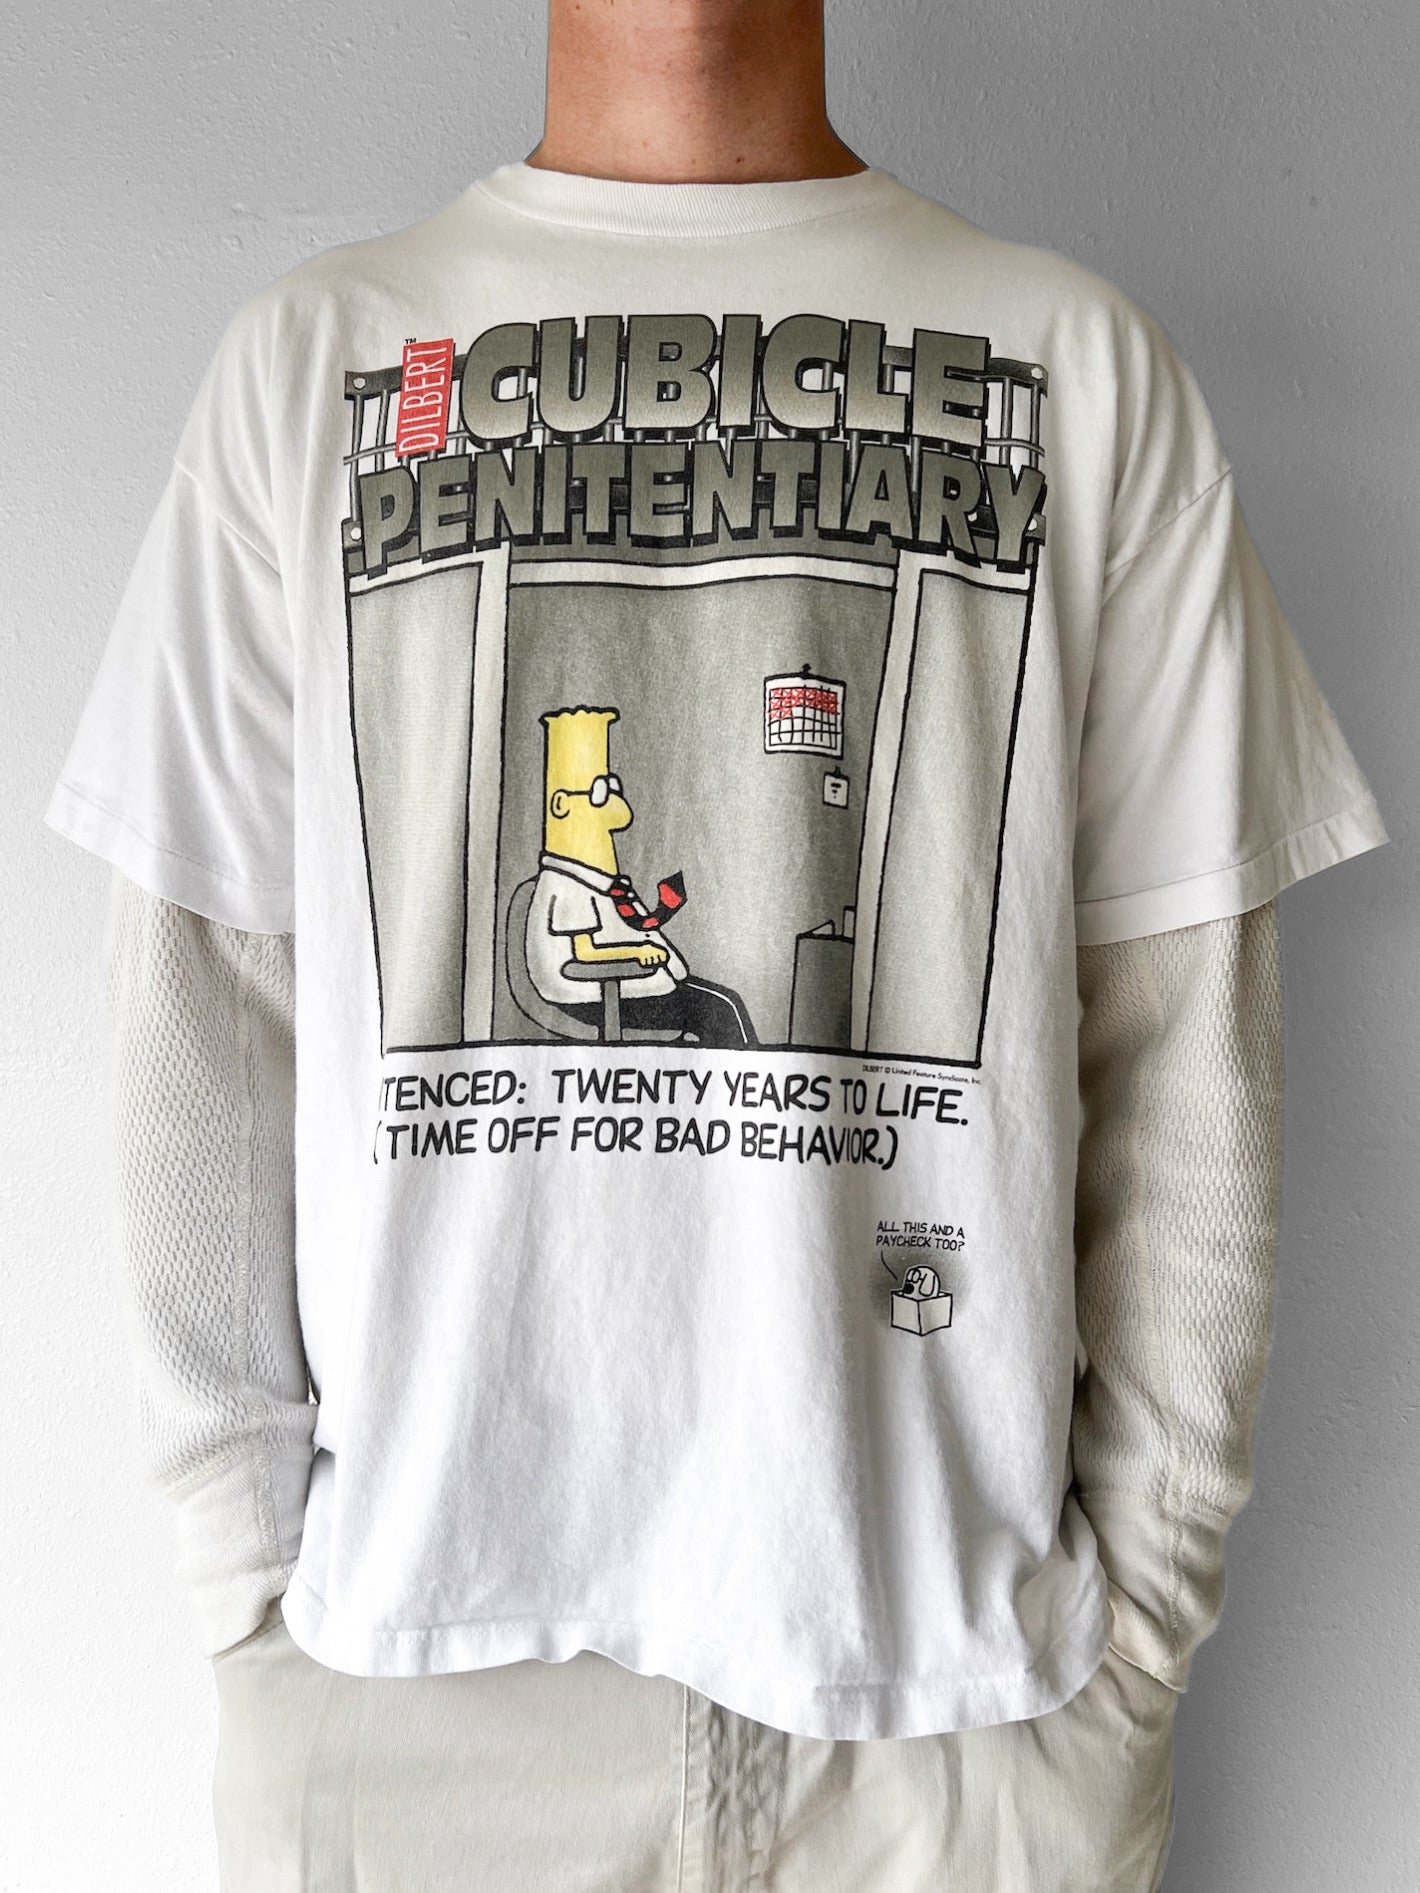 90’s Cubical Penetentary Comedy Art Shirt - XL